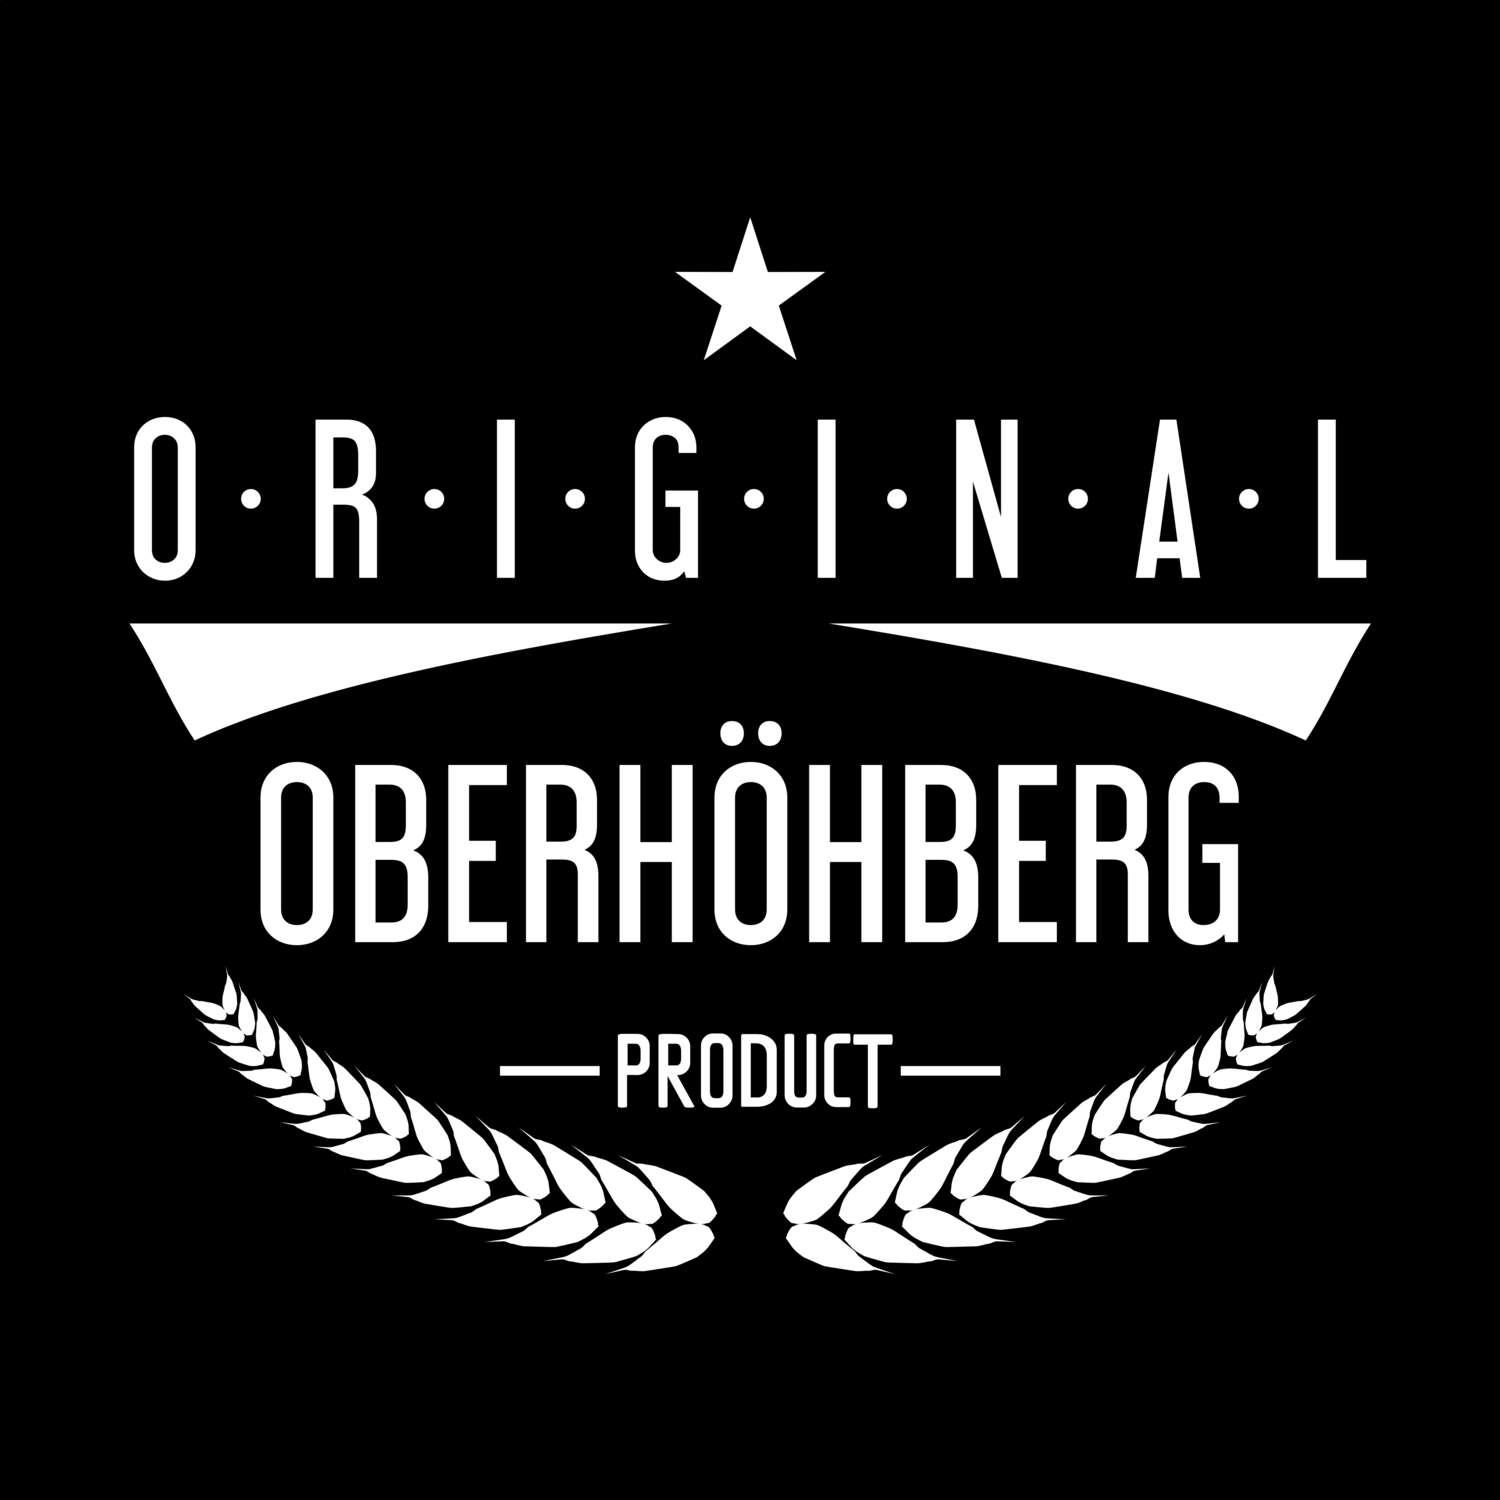 Oberhöhberg T-Shirt »Original Product«